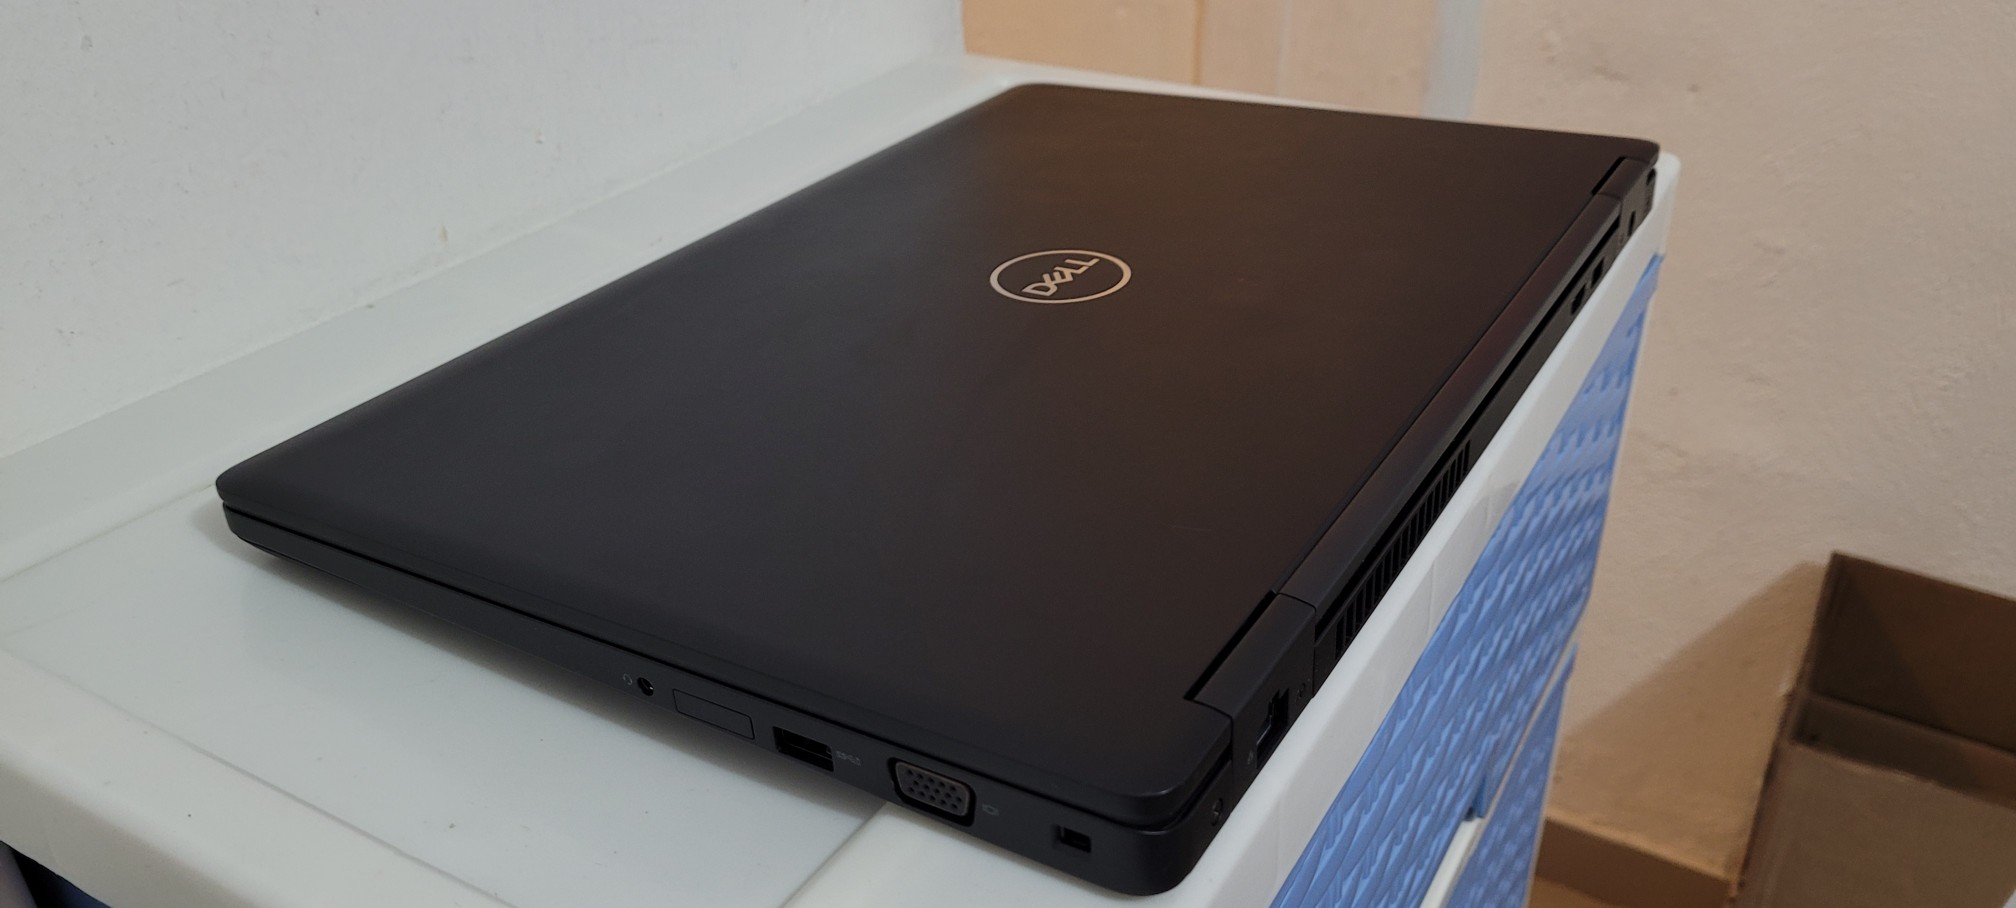 computadoras y laptops - Dell 5570 17 Pulg Core i7 6ta Ram 16gb Disco 256gb SSD Video intel 8gb Aty R7 2